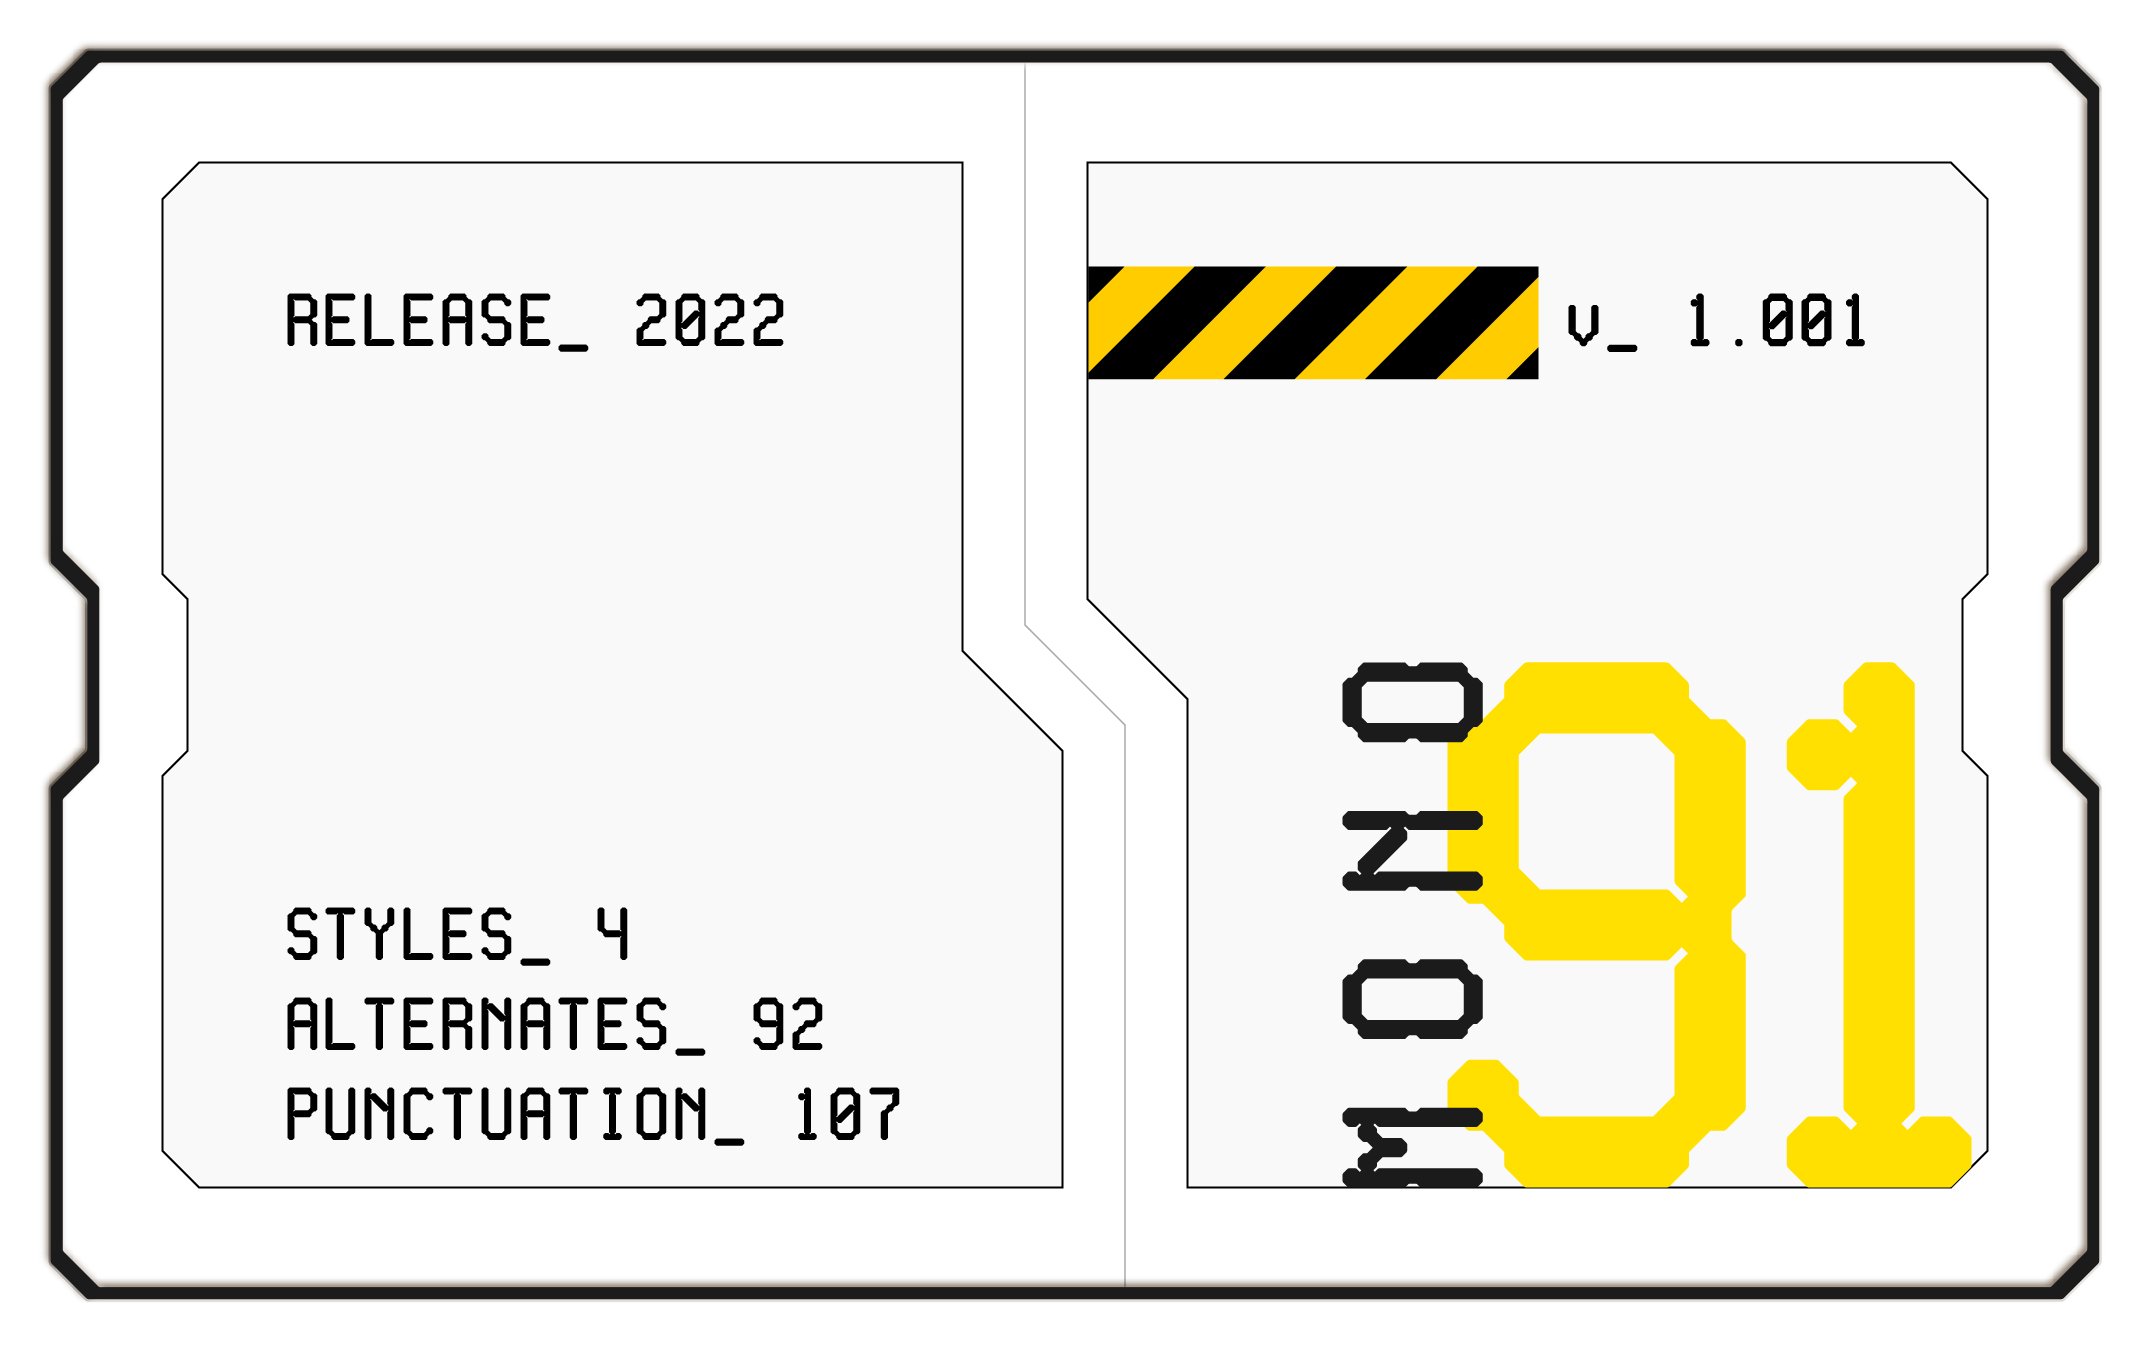 Mono 91 [Monospaced Font]cover image.